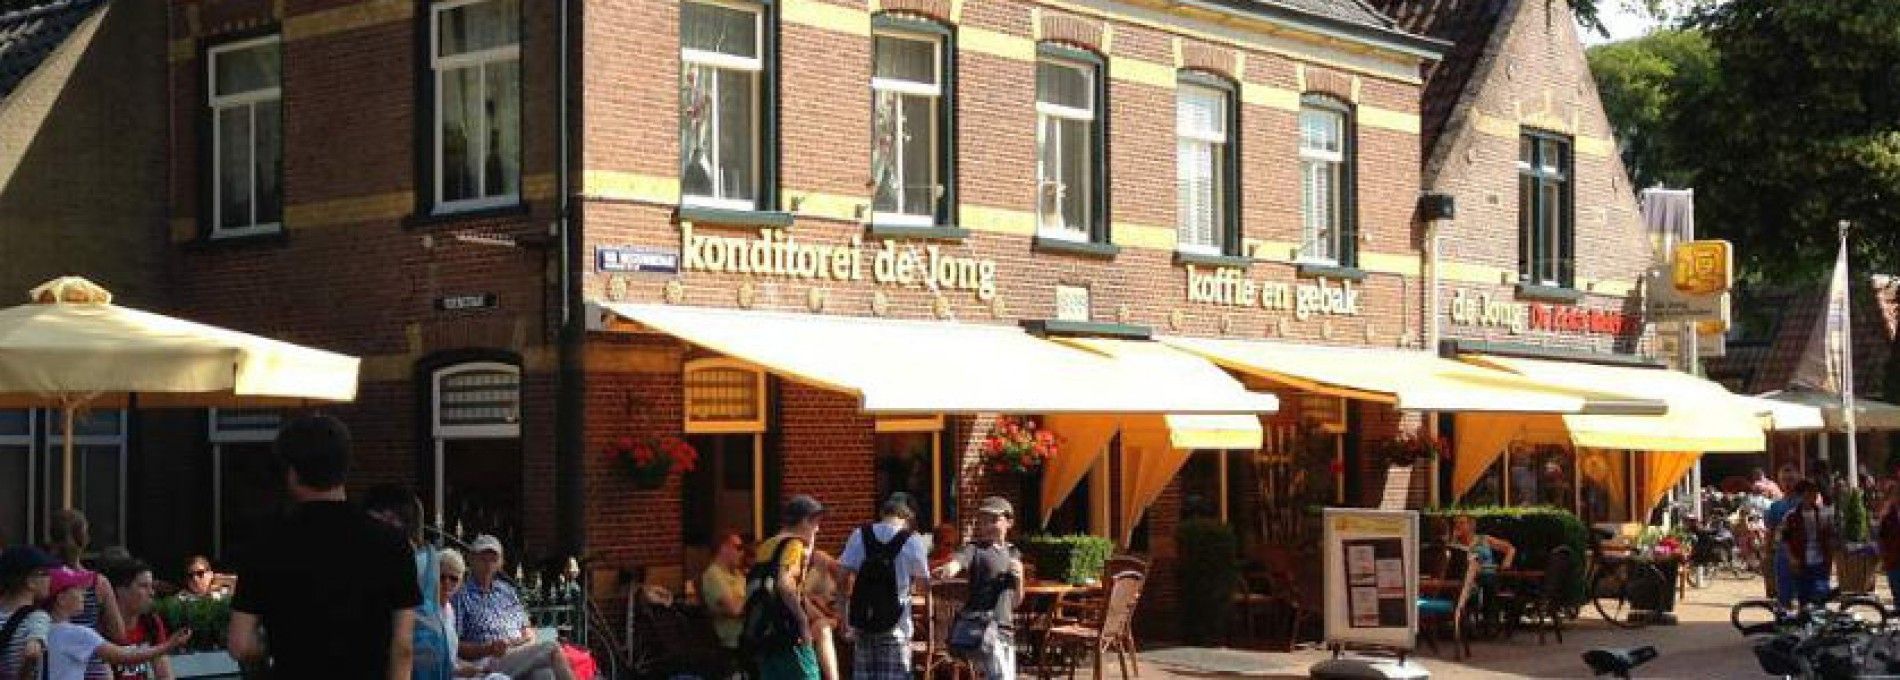 Konditorei and Ice cream parlor de Jong - Tourist Information “VVV” Ameland